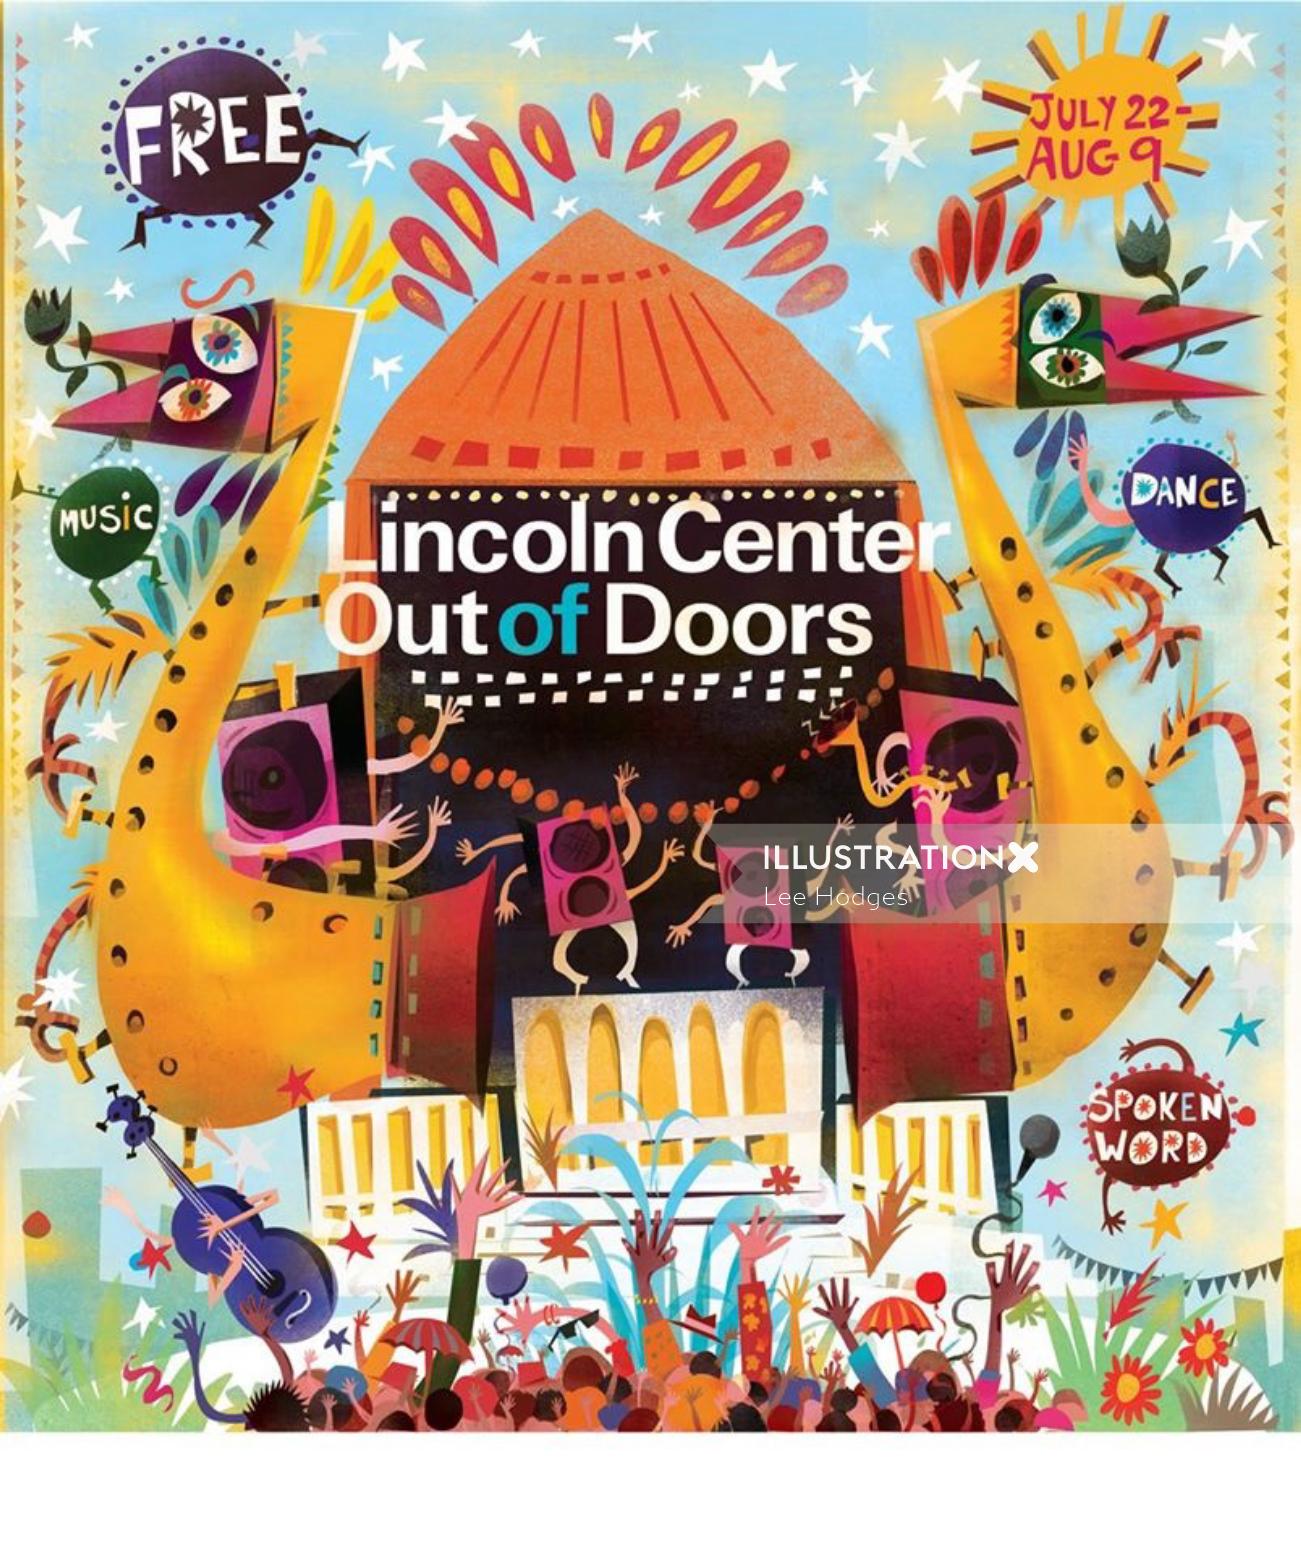 Lincoln festival de música libre al aire libre